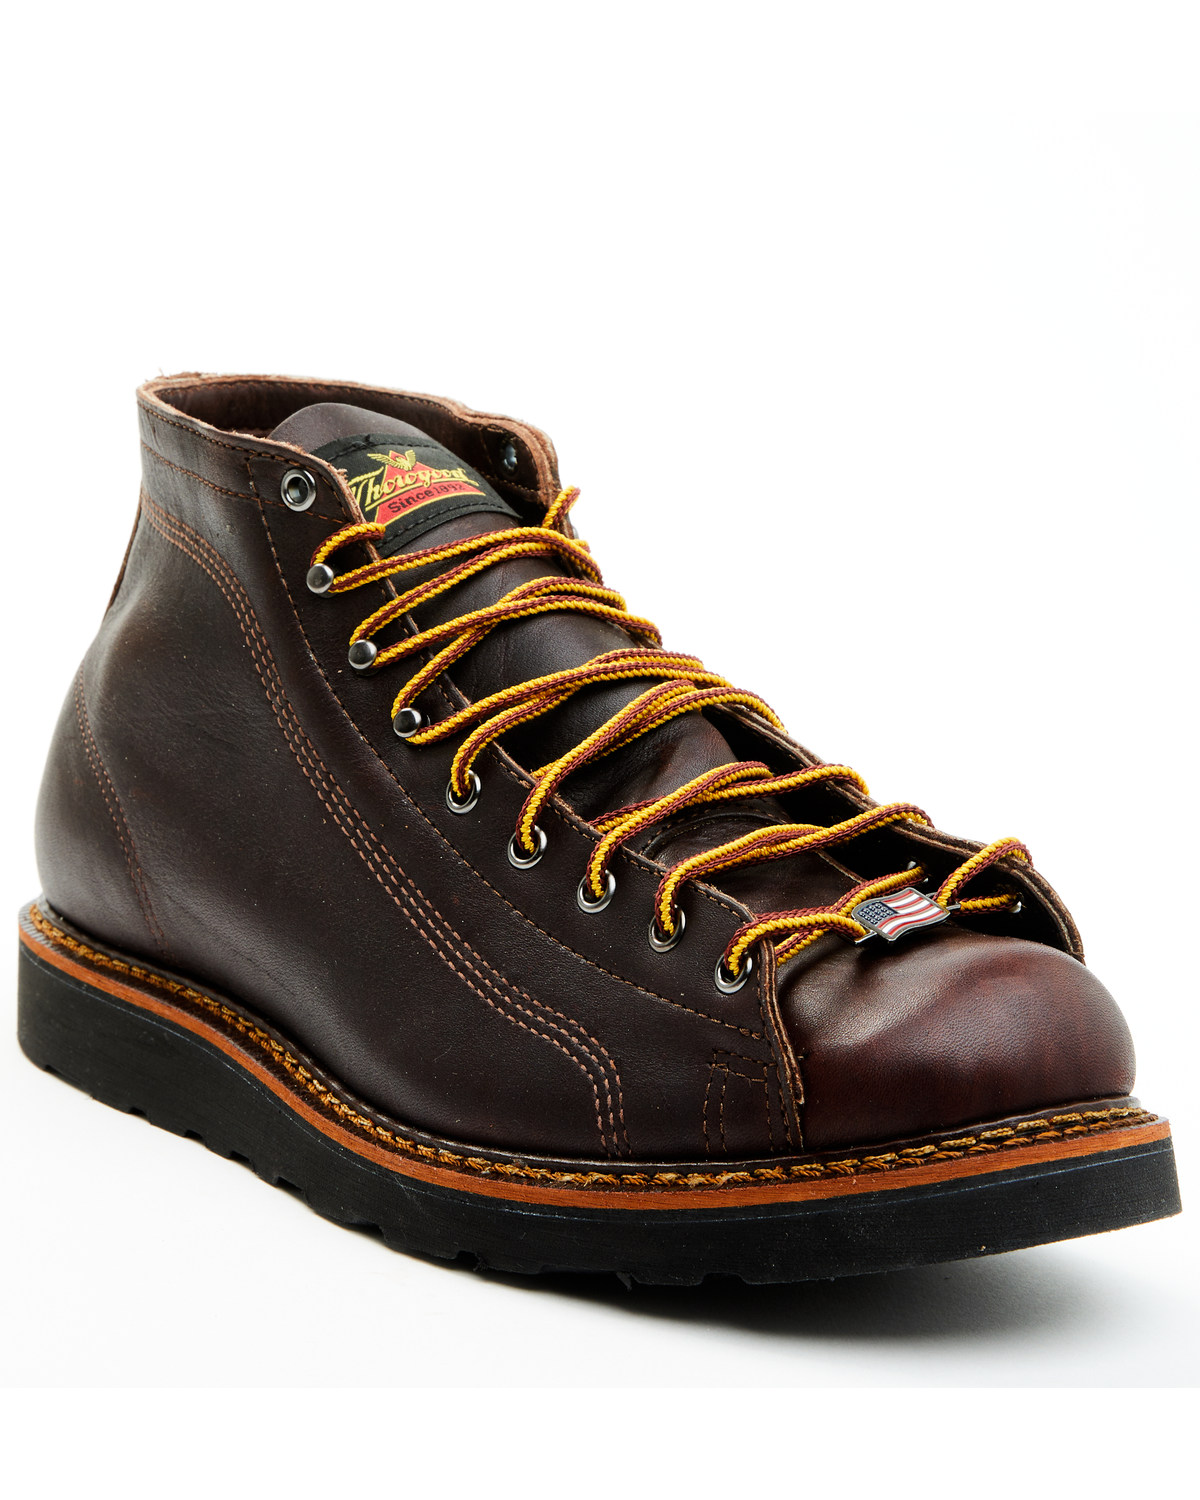 Thorogood Men's Walnut Roofer Work Boots - Soft Toe